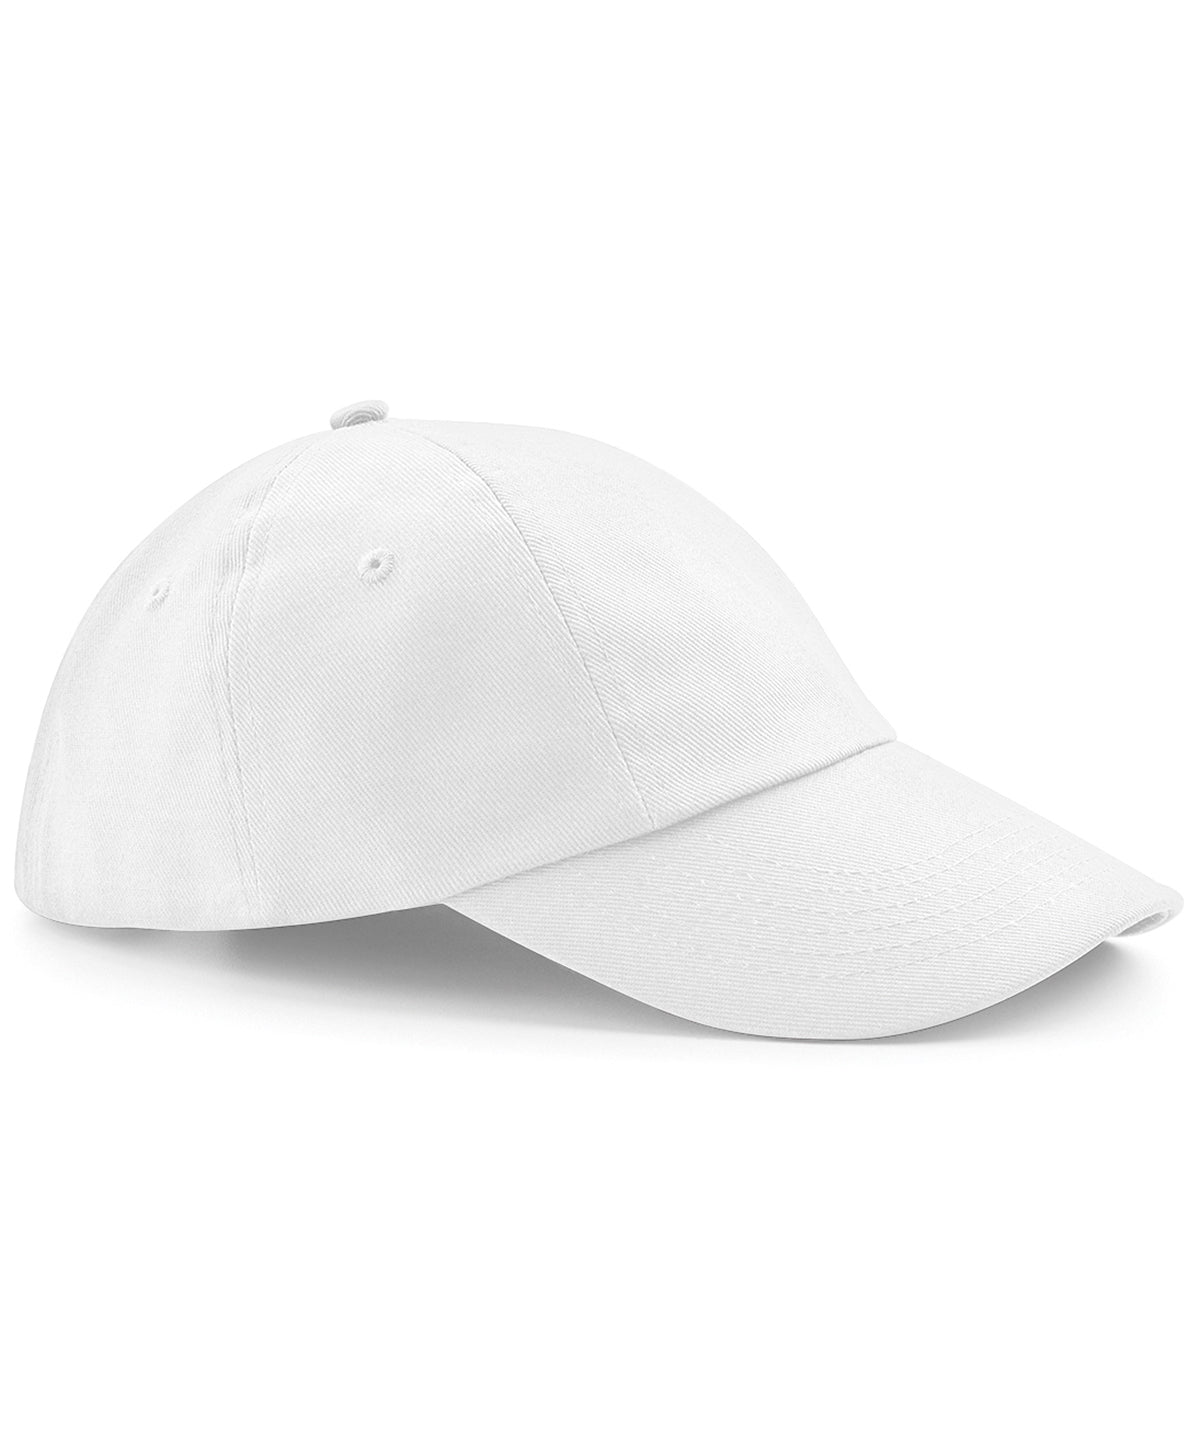 Personalised Caps - White Beechfield Low-profile heavy cotton drill cap